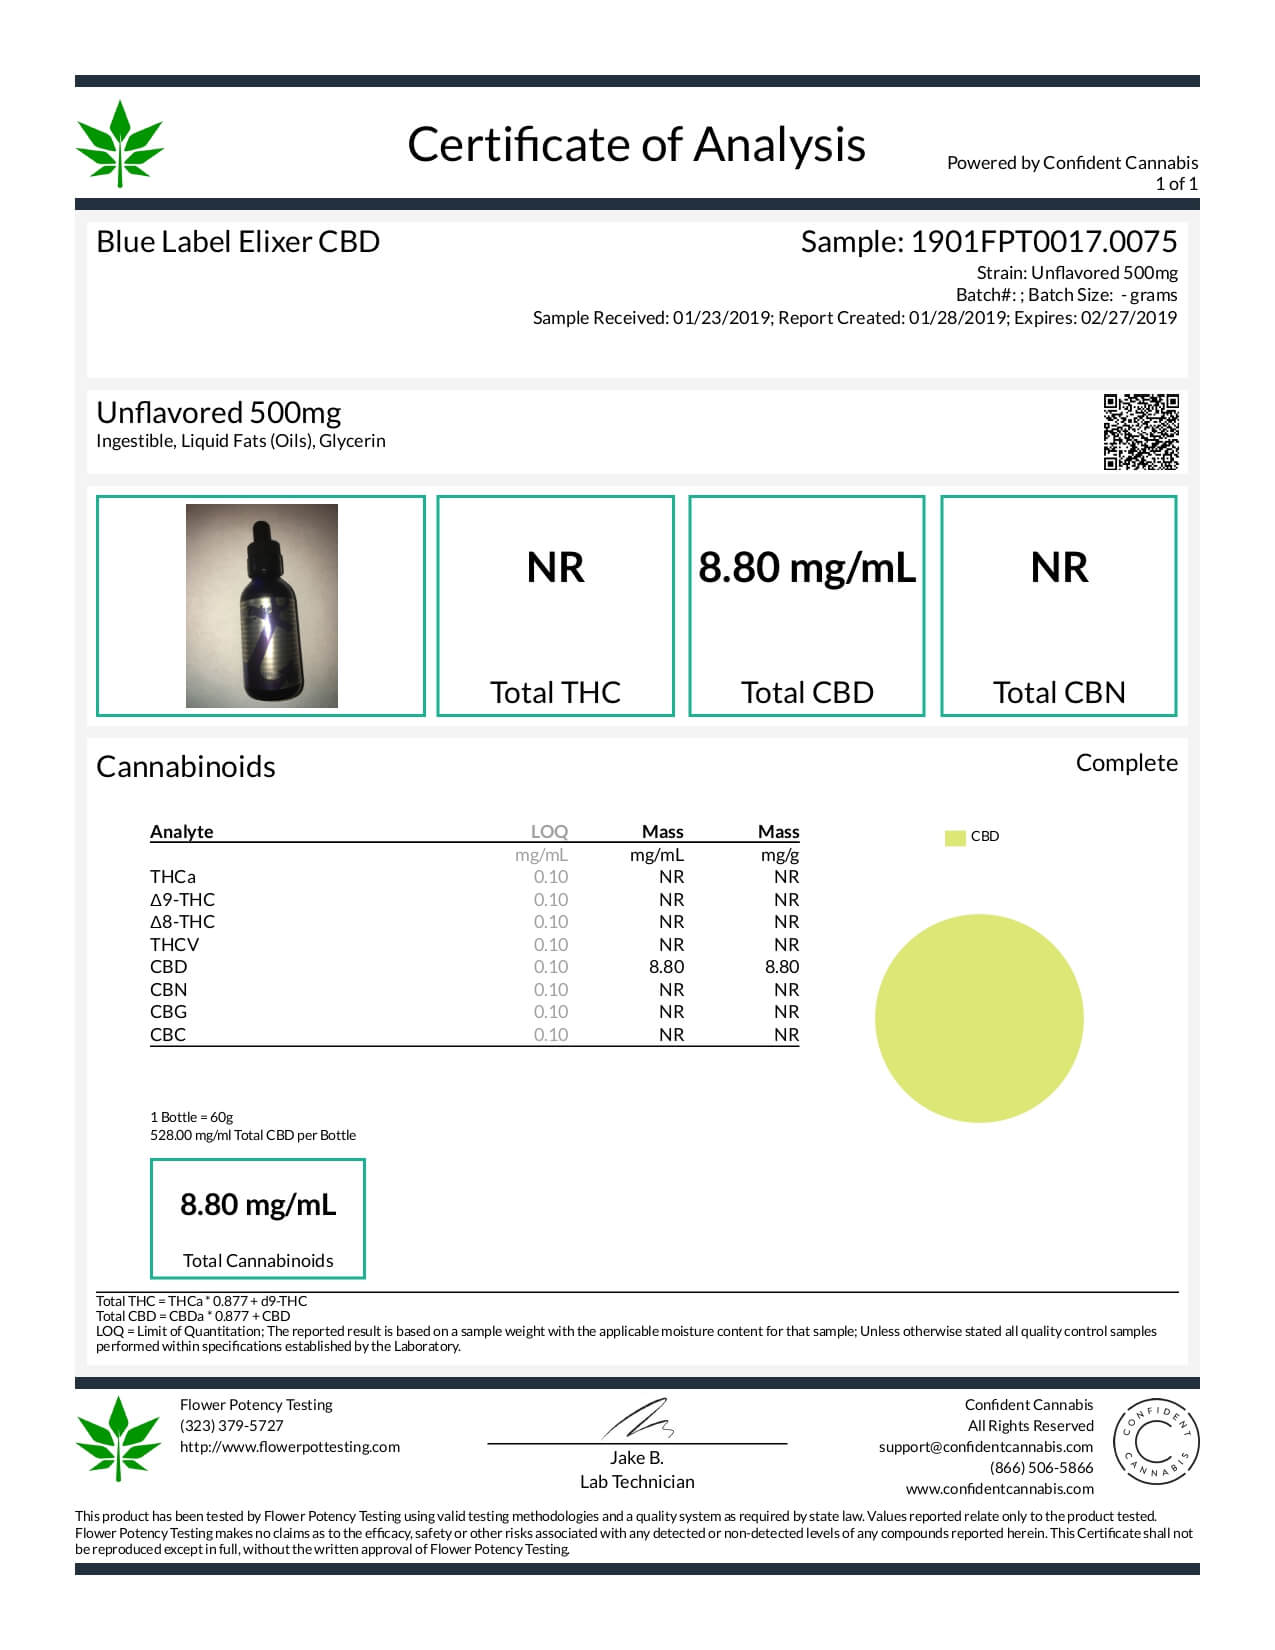 Blue Label CBD Vape Juice Unflavored Additive 500mg Lab Report